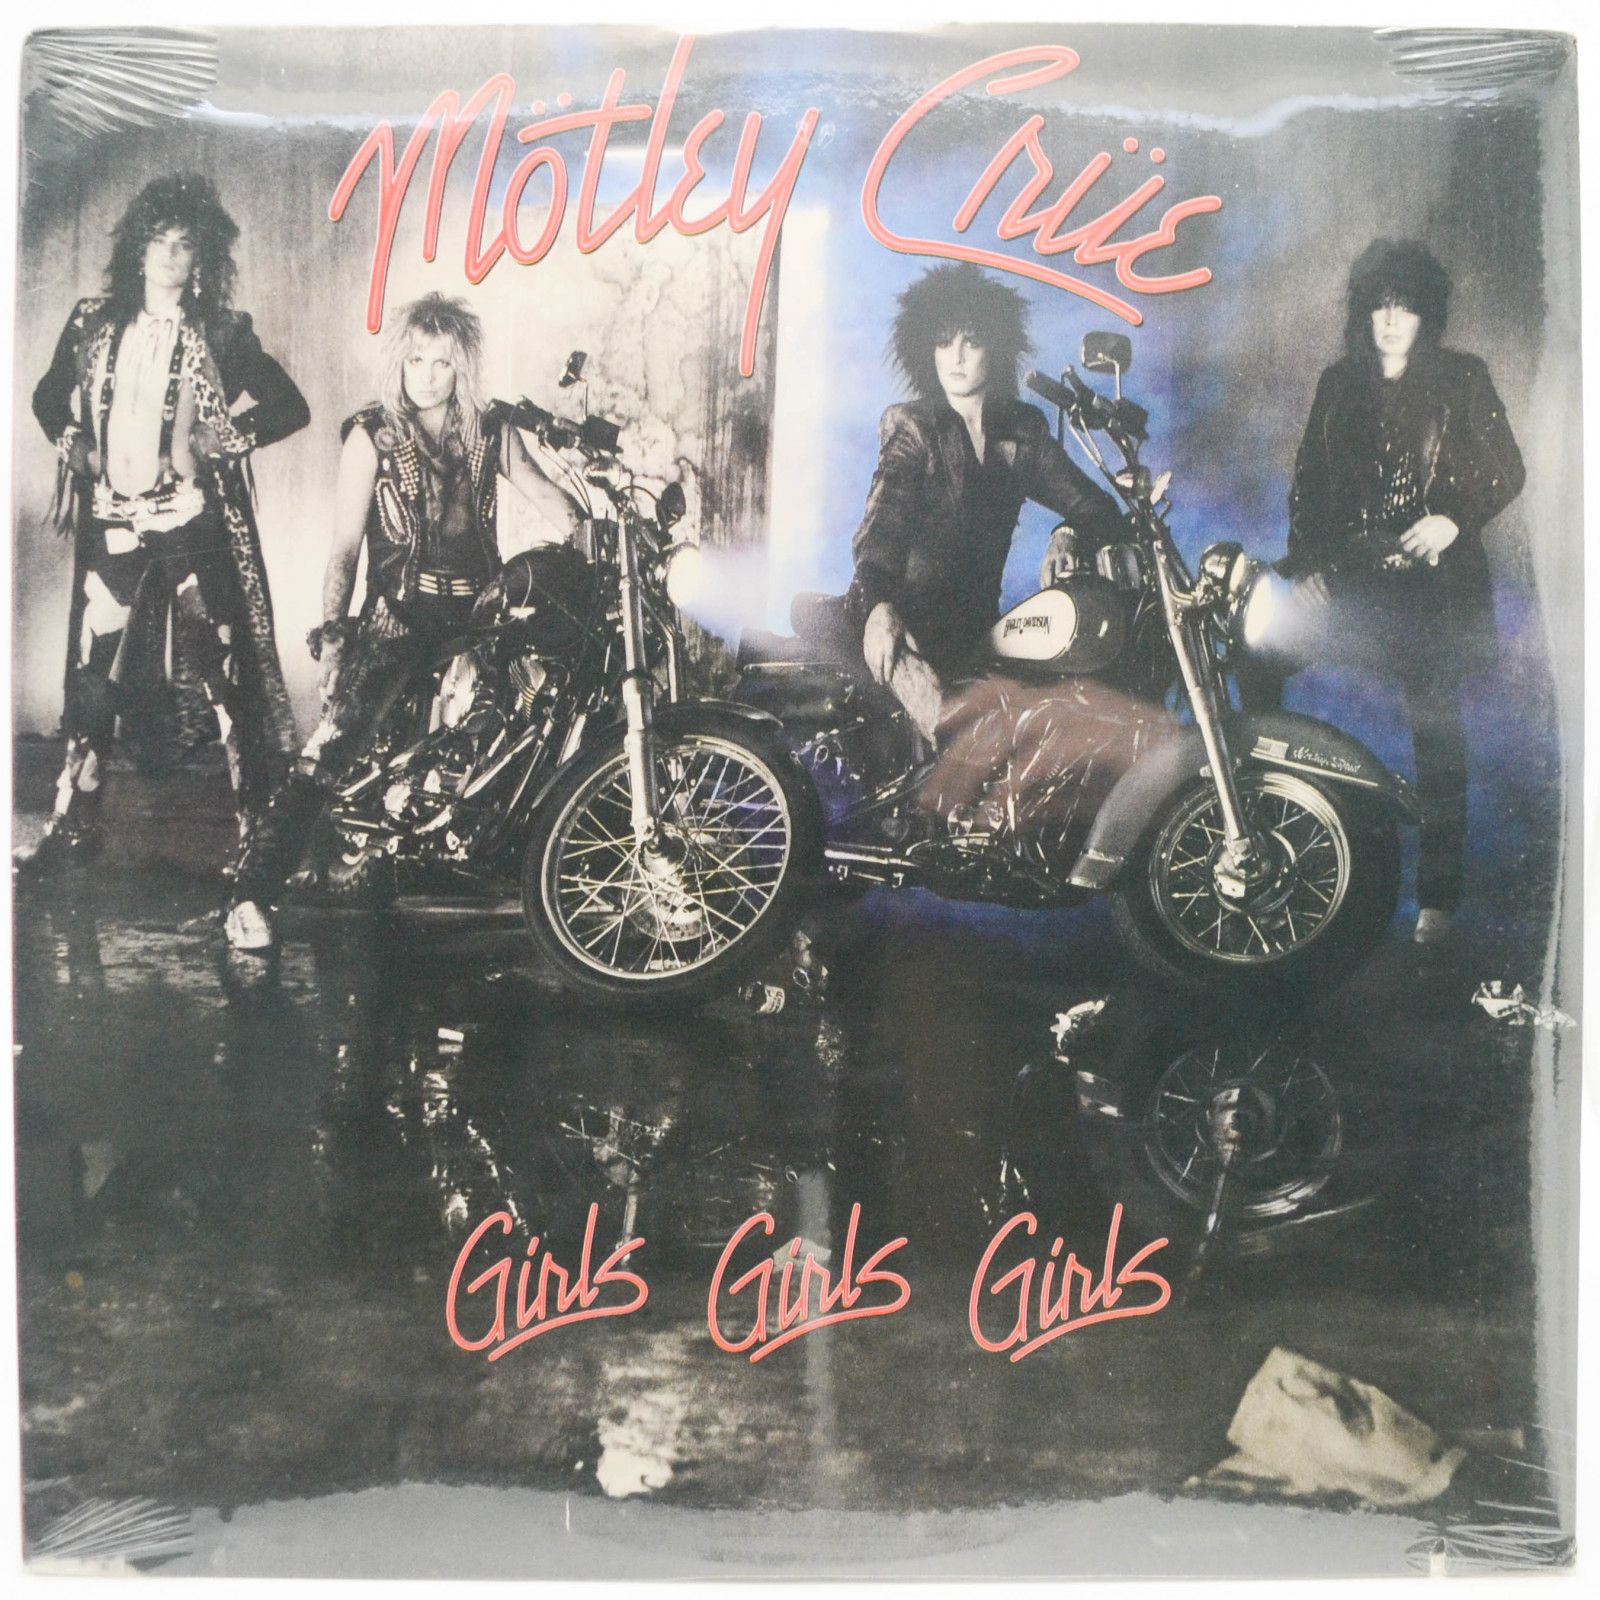 Mötley Crüe — Girls, Girls, Girls (1-st, USA), 1987